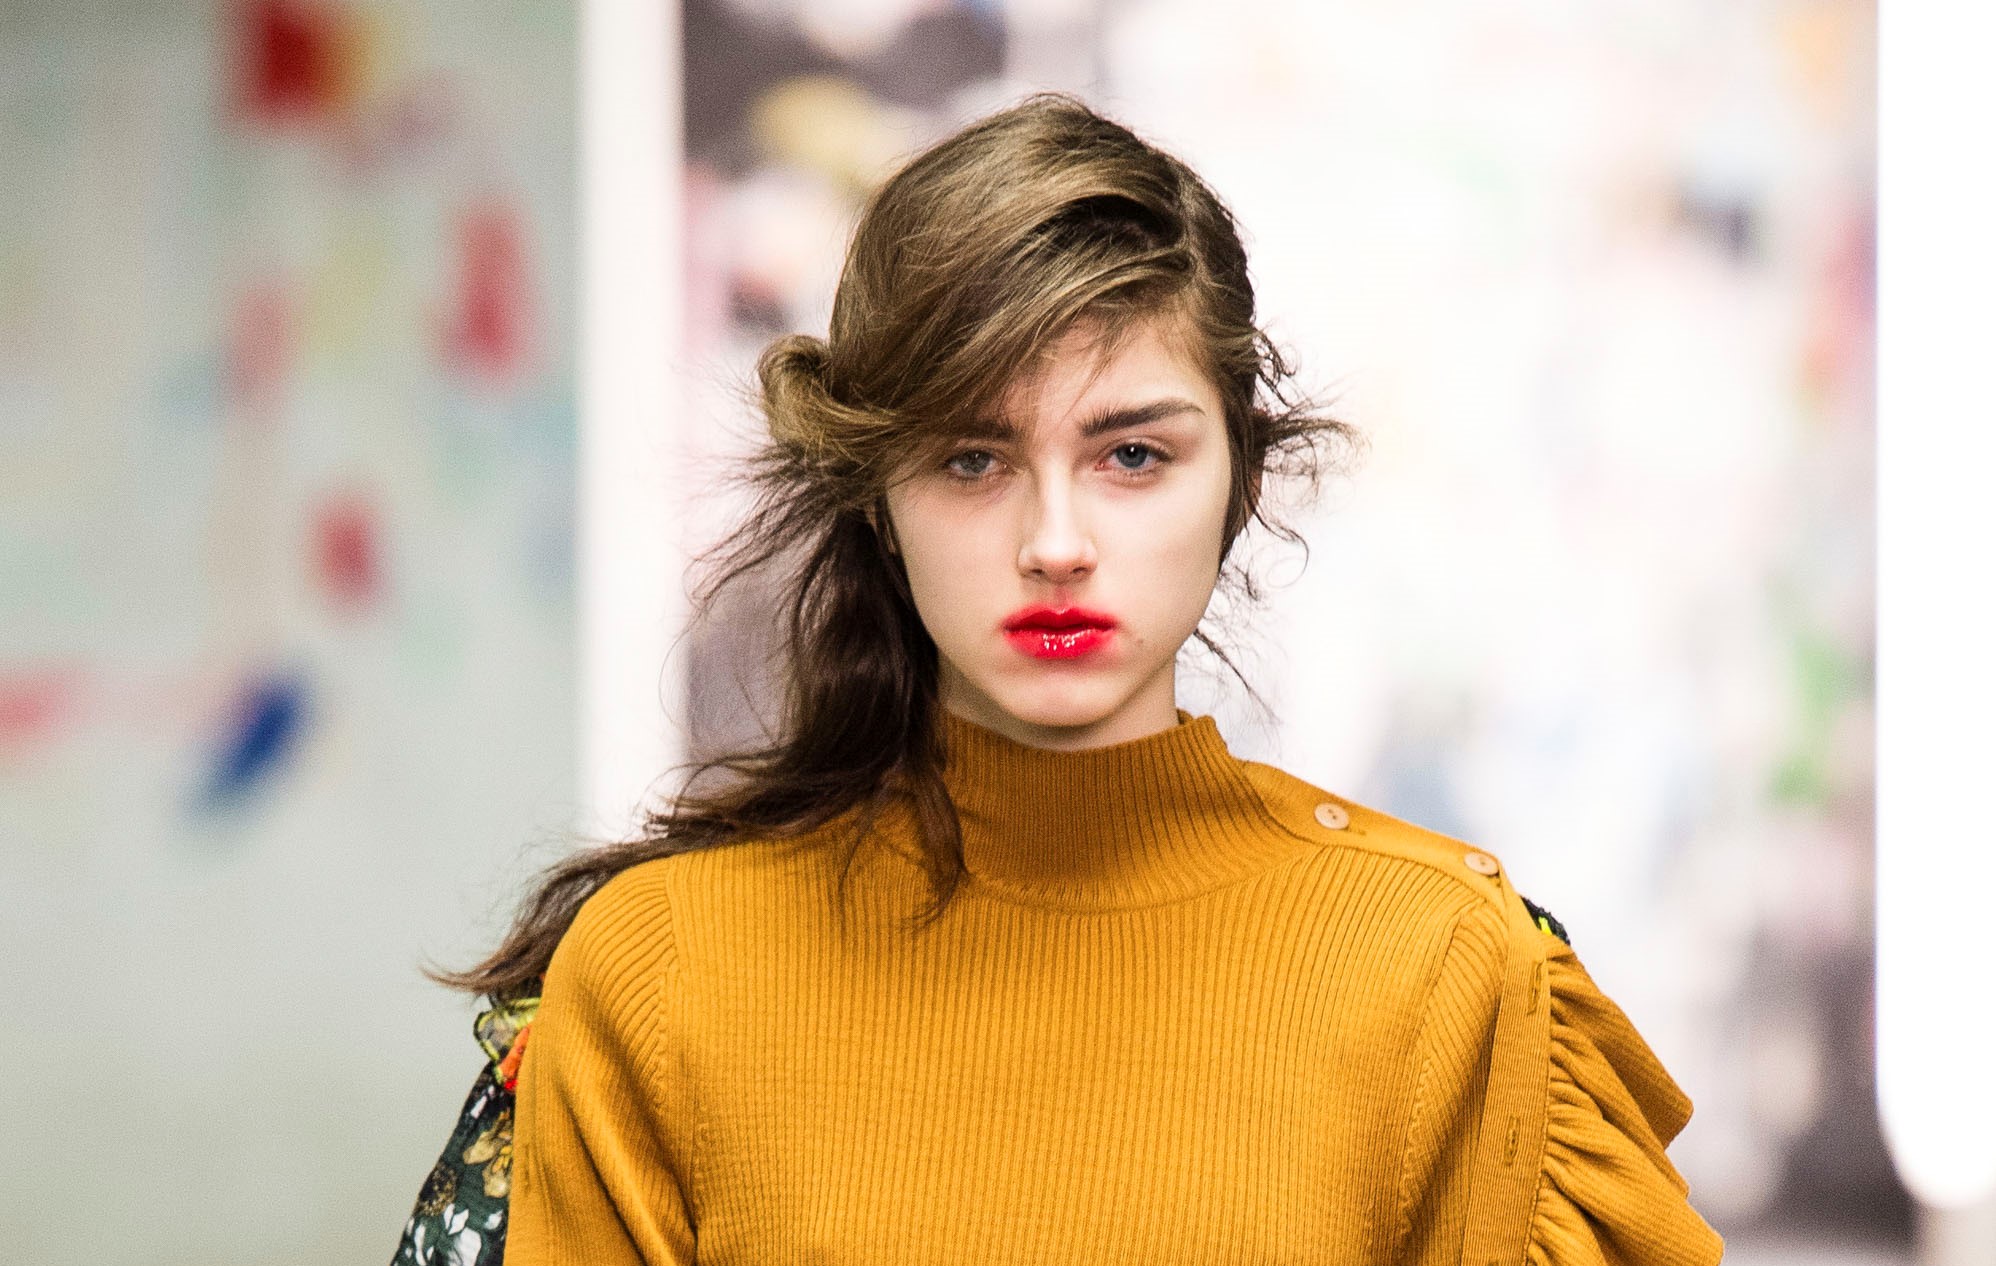 Tendenze make-up: dalla London Fashion Week arriva il trend Snog Lips (video)